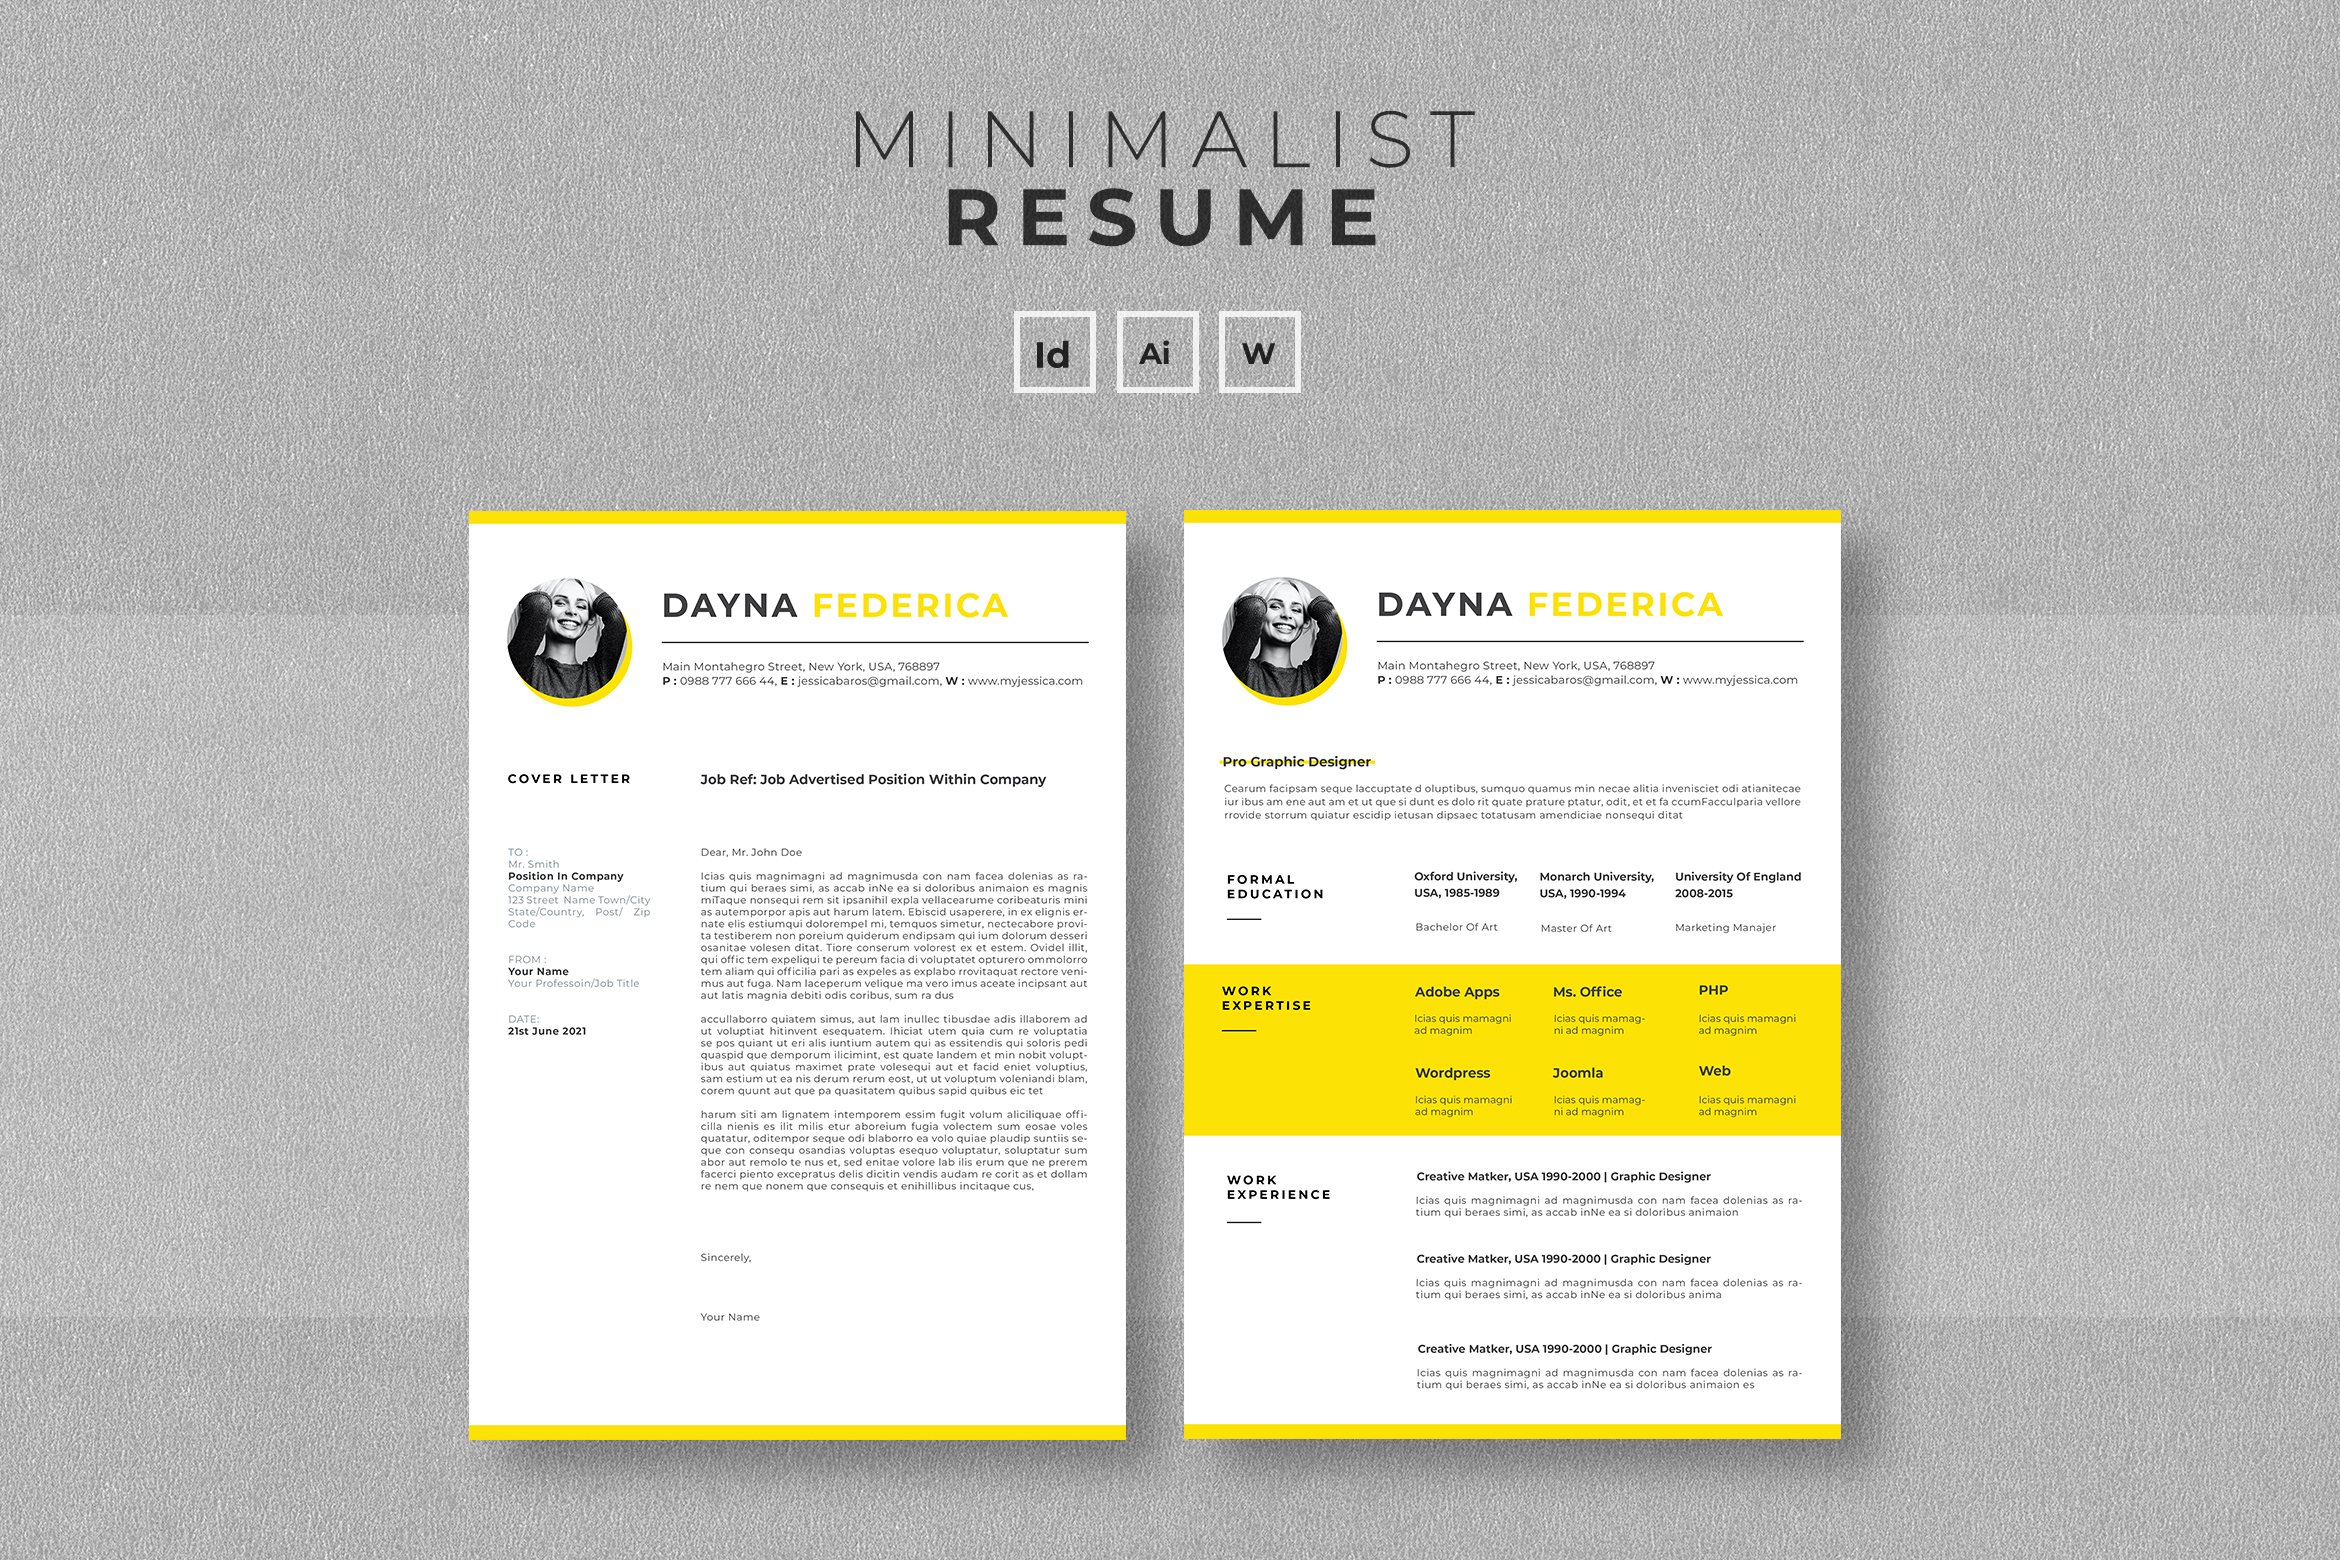 Minimalist Resume/CV cover image.